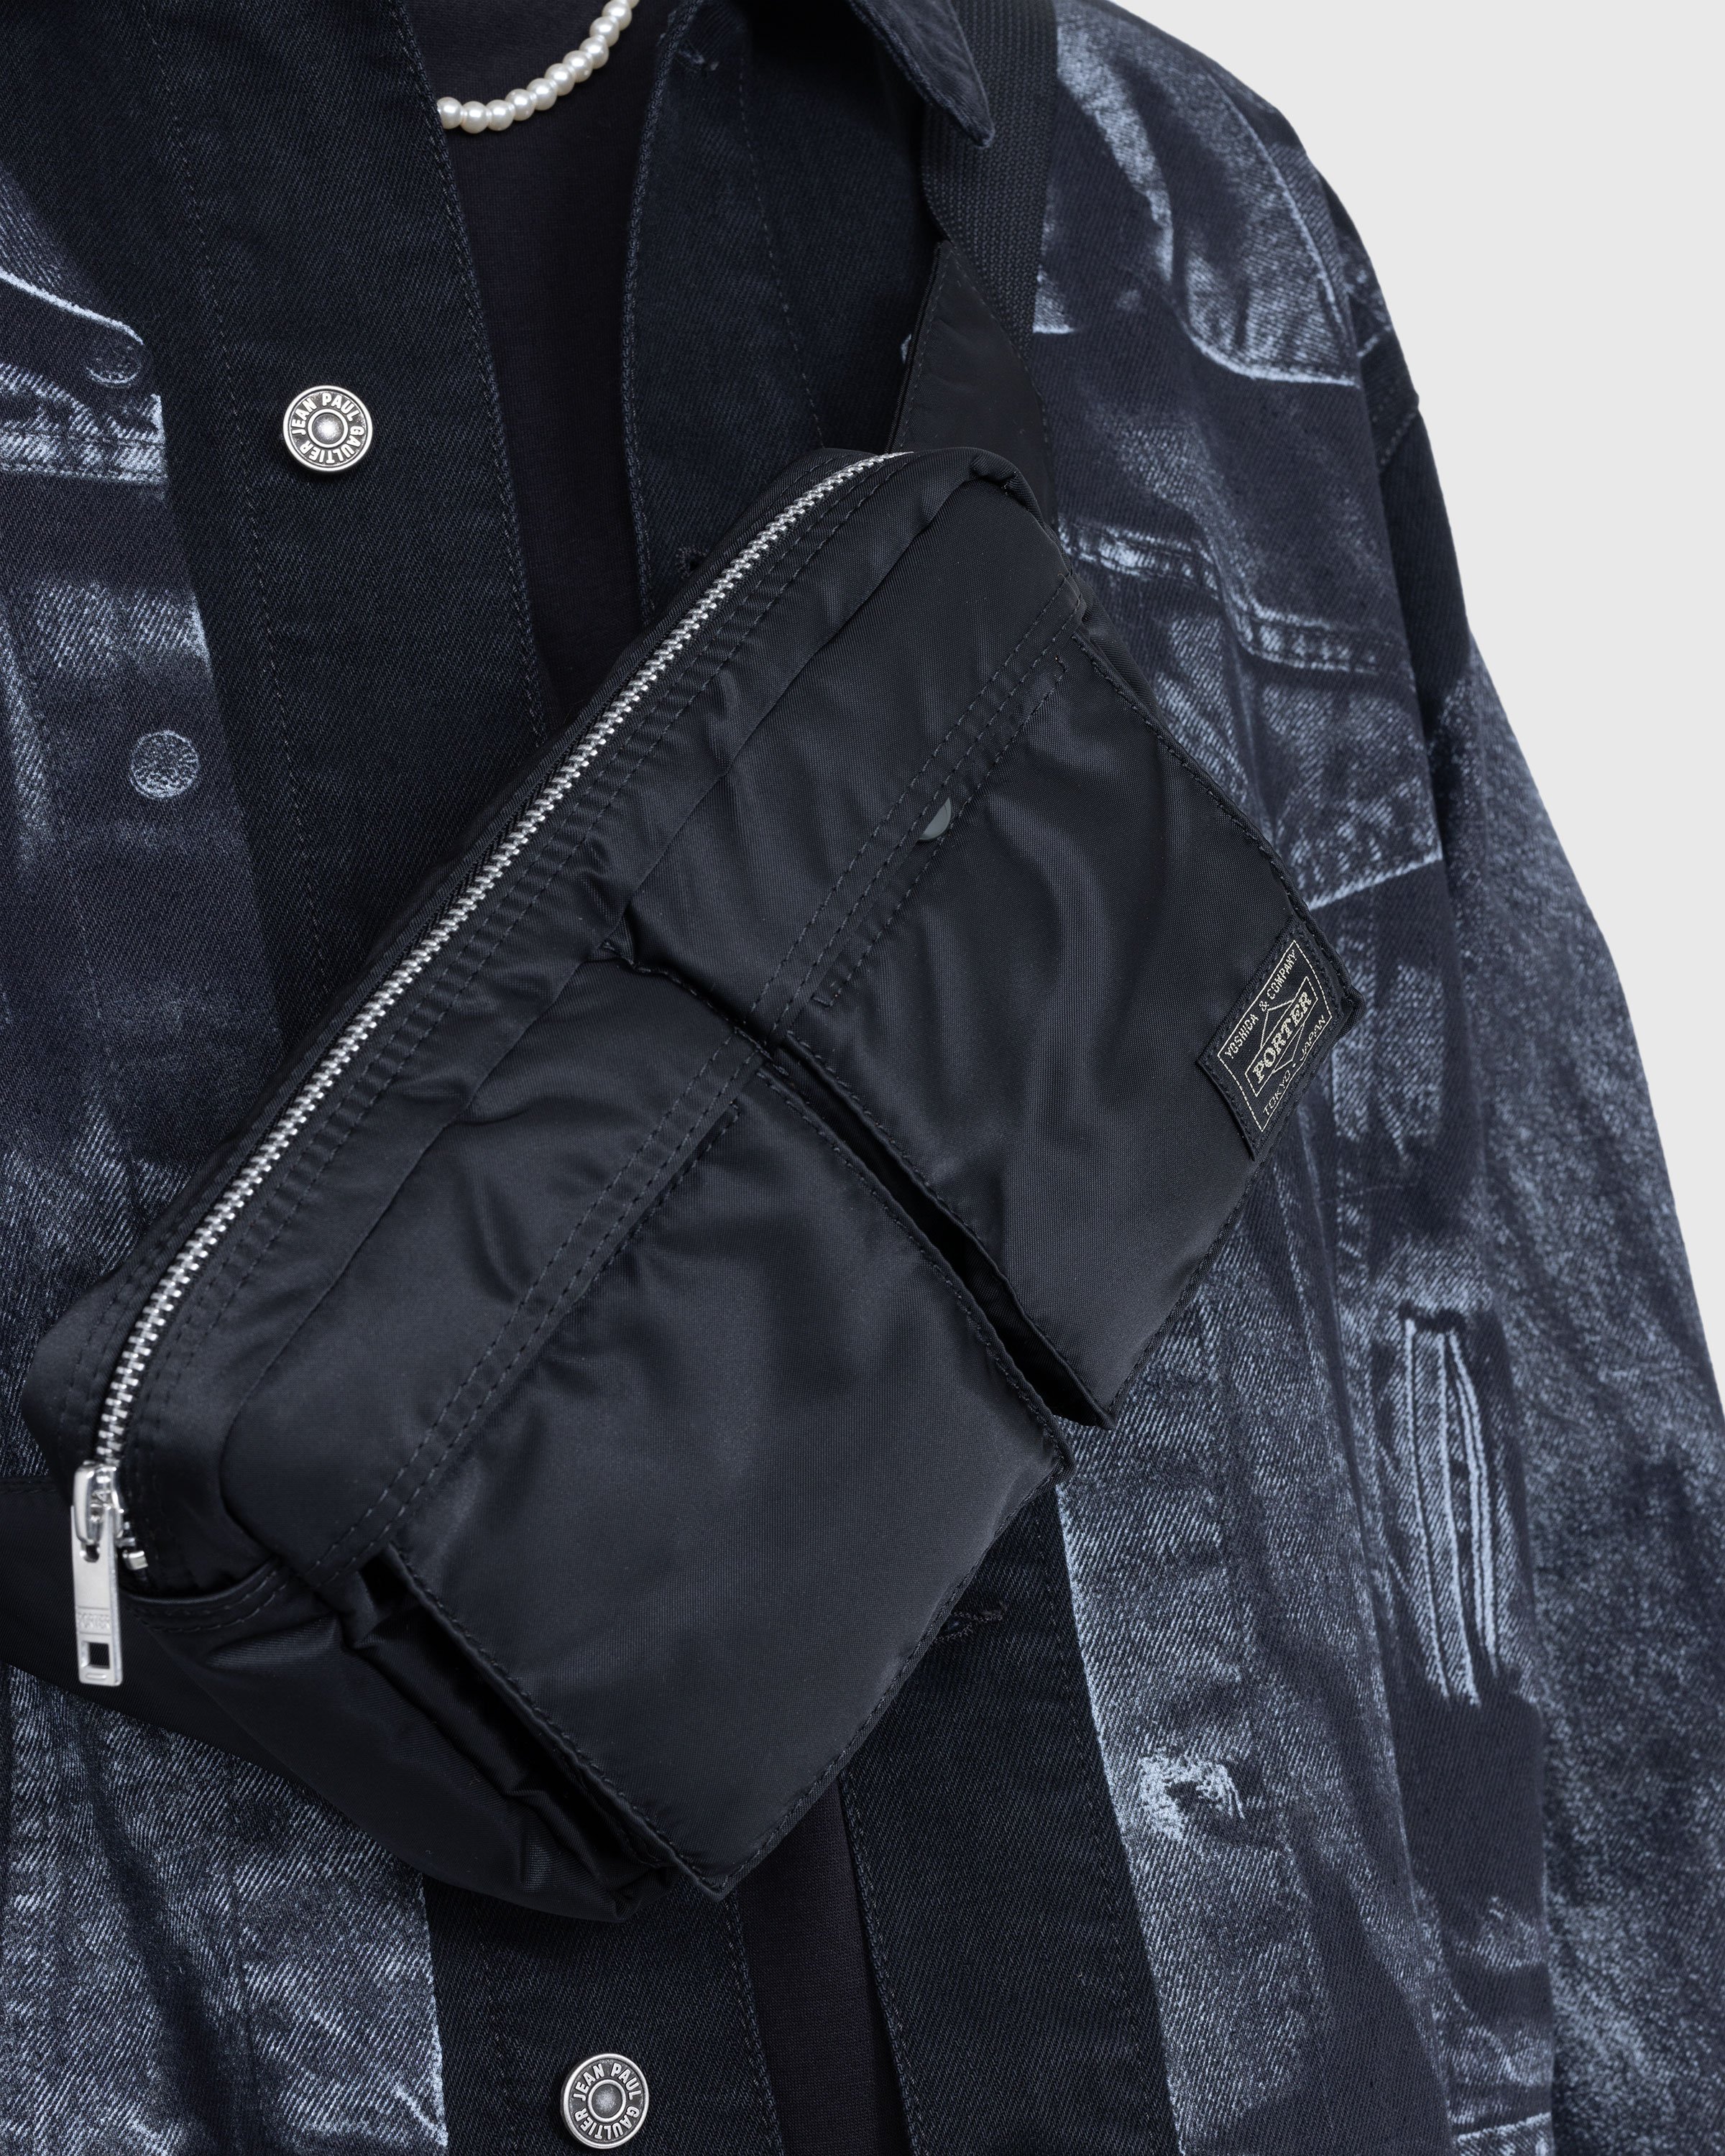 Porter-Yoshida & Co. - Tanker Waist Bag Black - Accessories - Black - Image 7